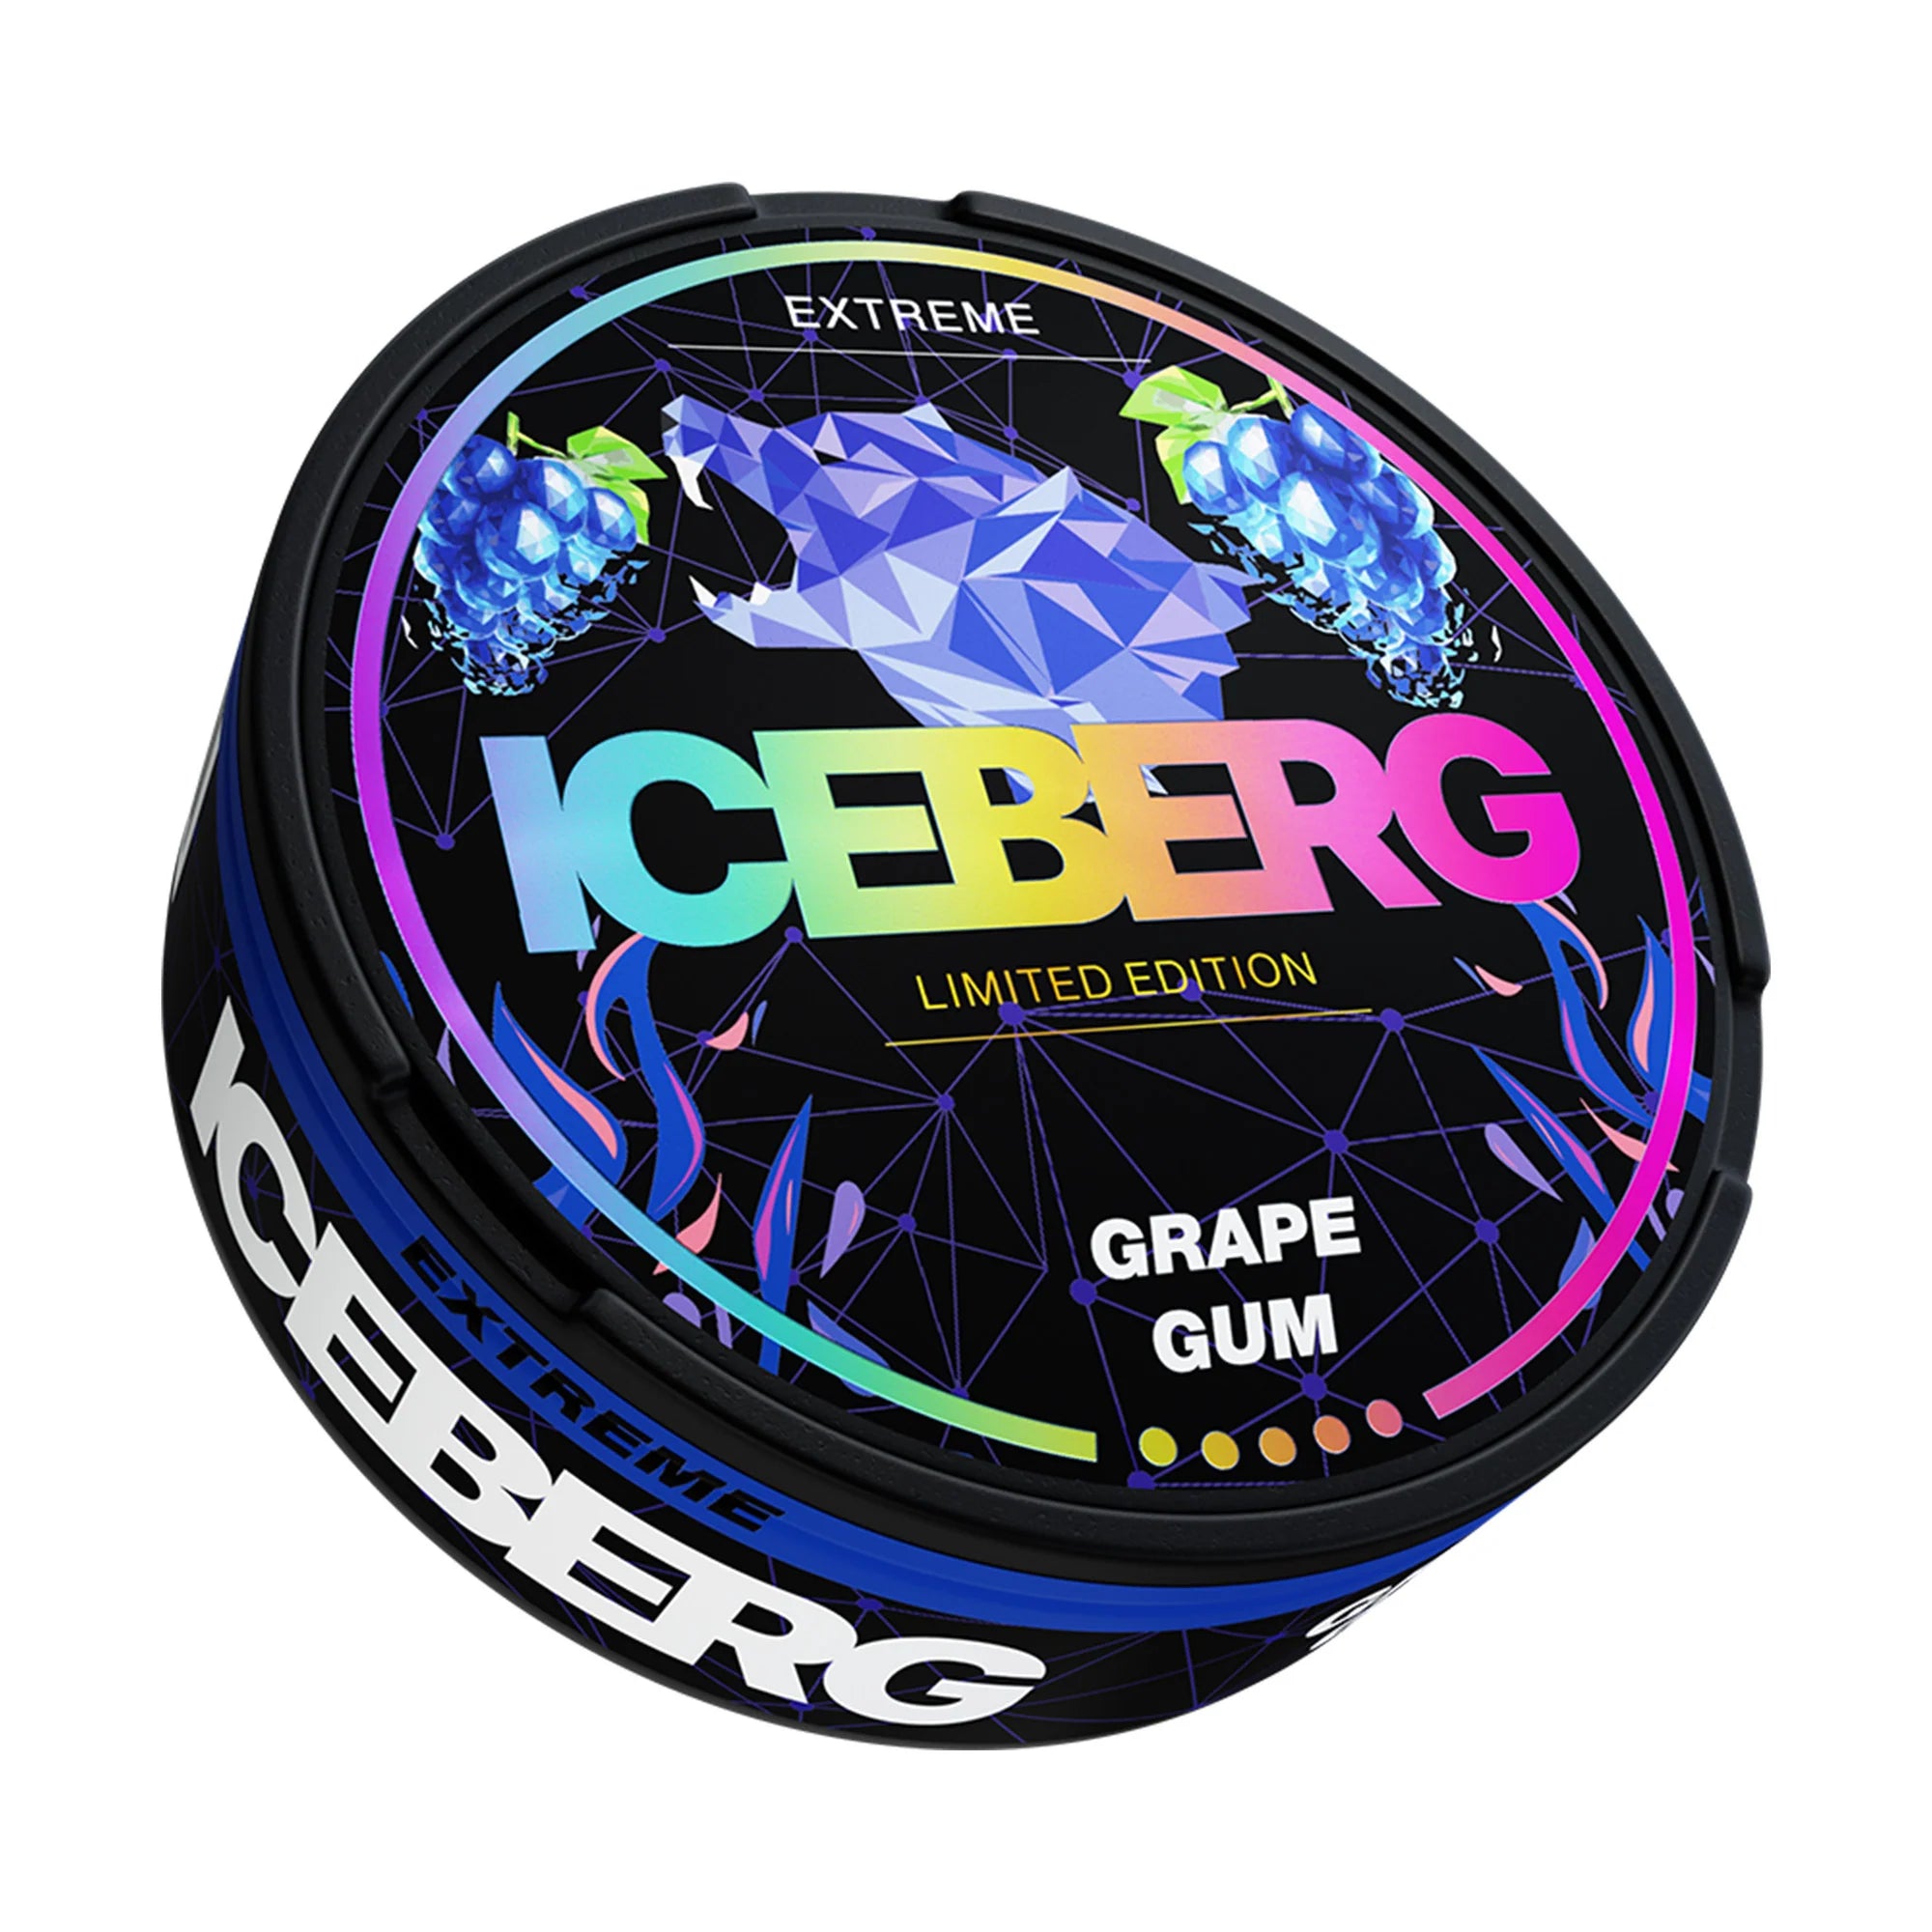 Iceberg Grape Gum - EUK